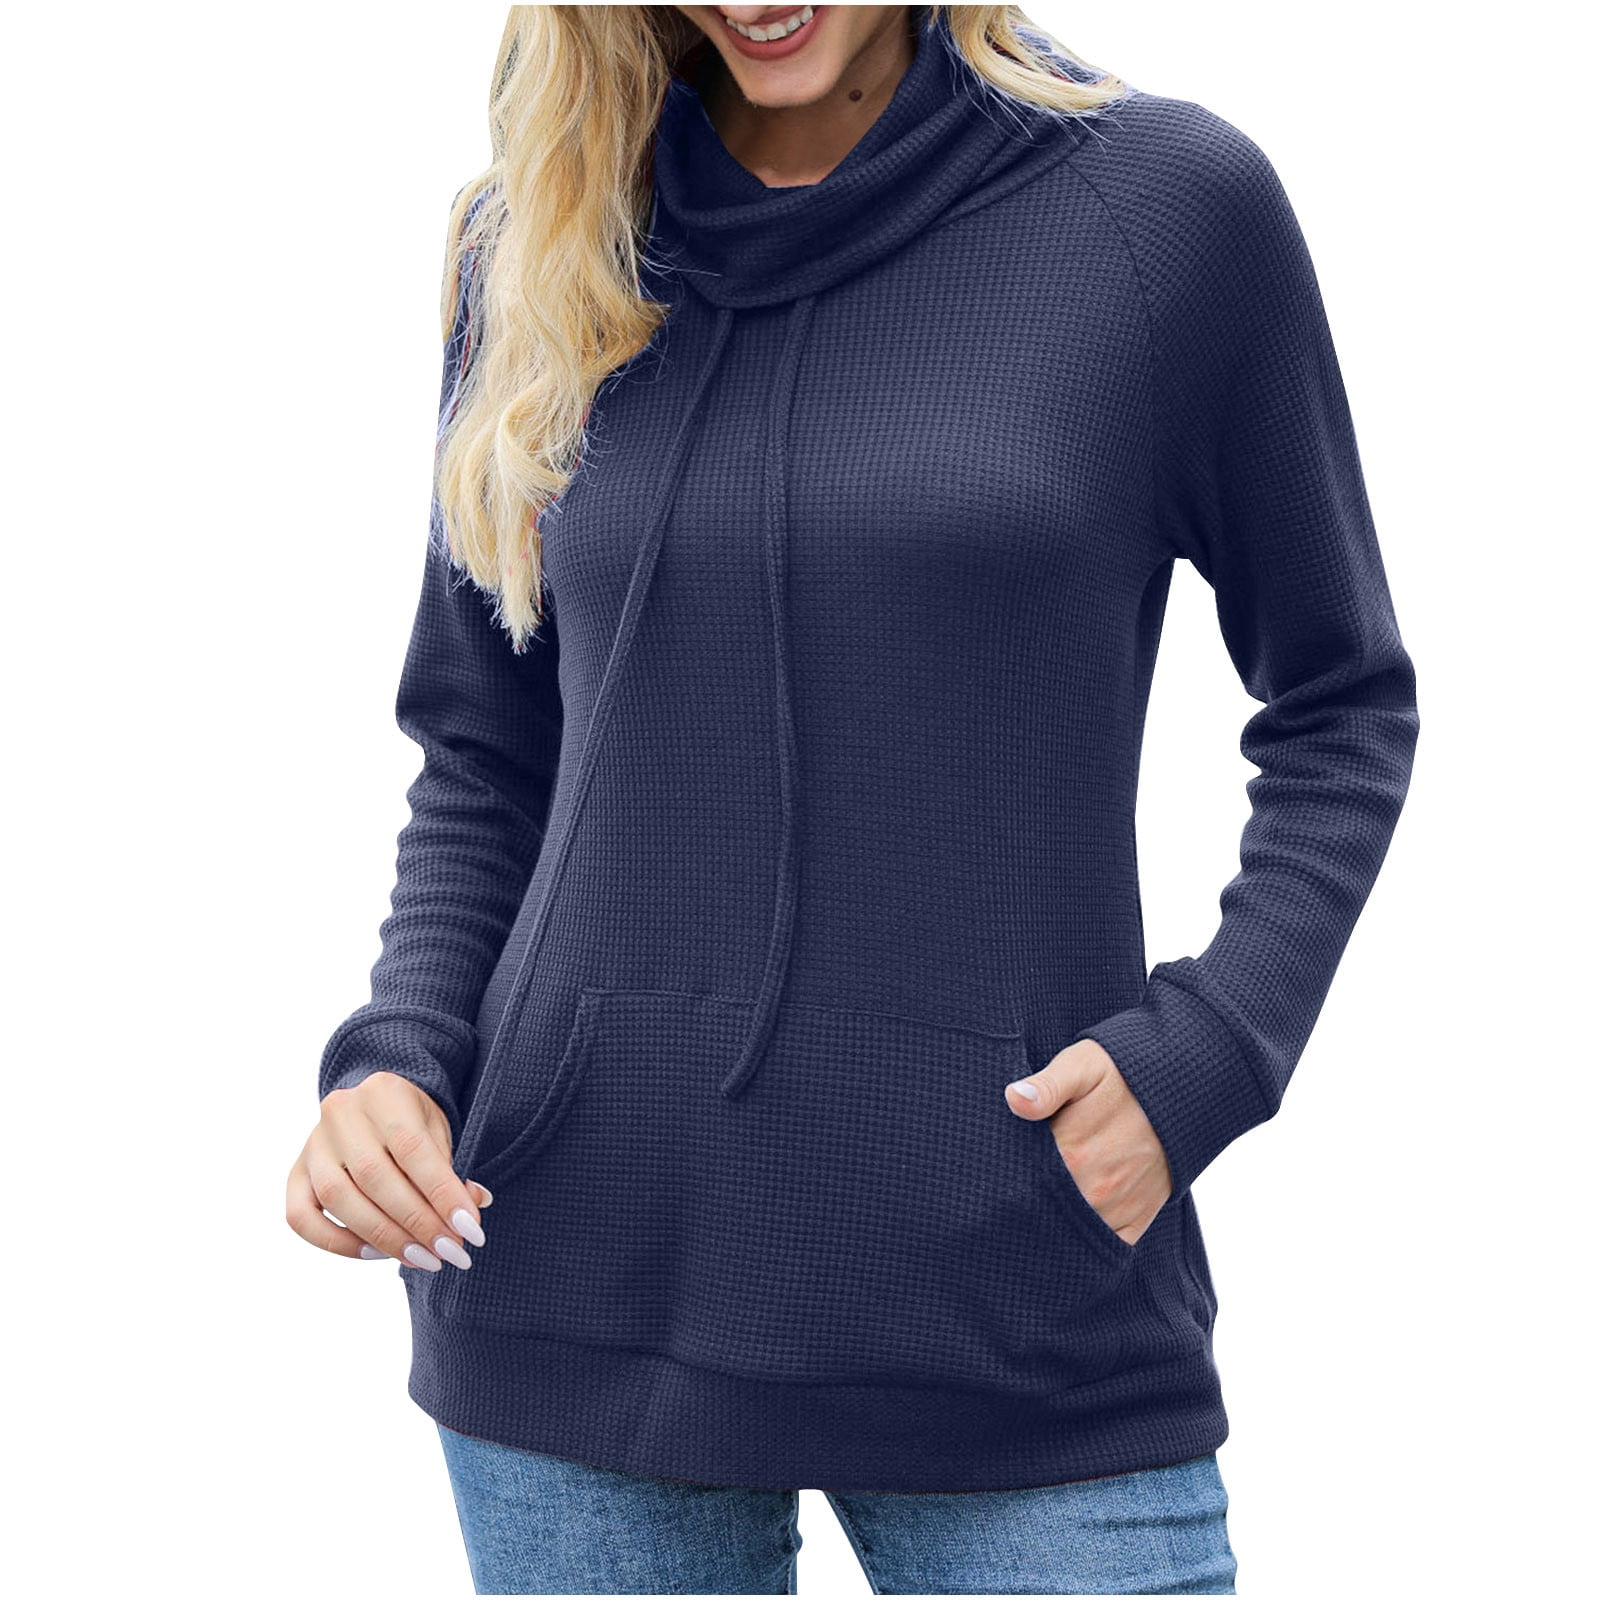 Dezsed Women's Solid Color Long Sleeve Turtleneck Sweater Top Pocket ...